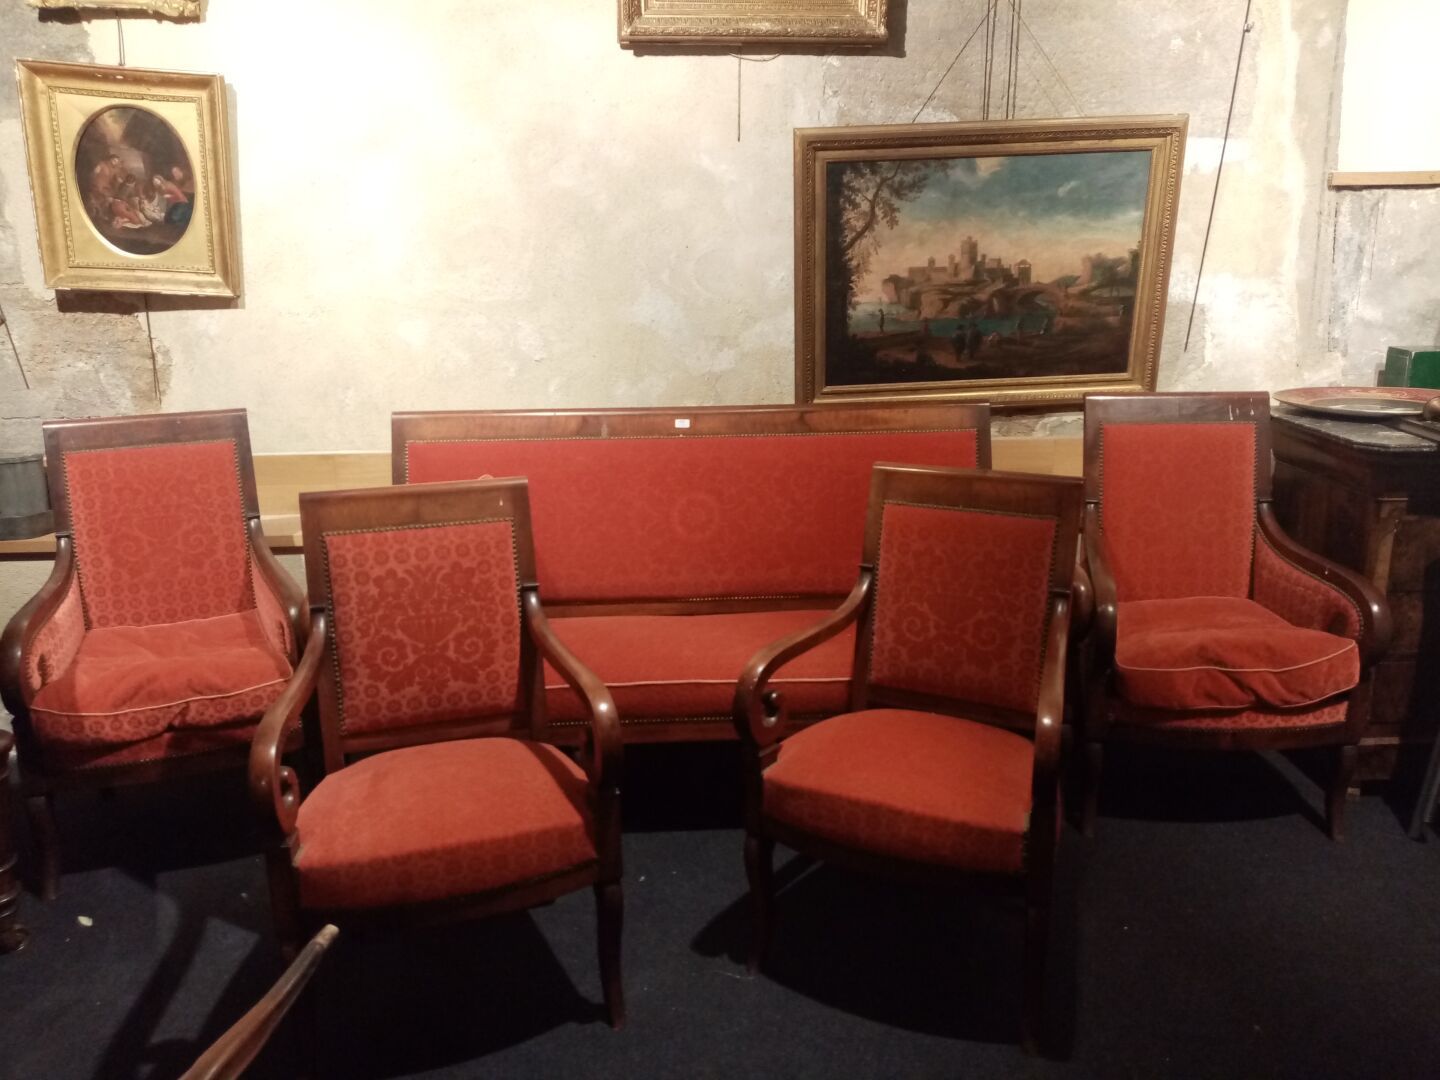 Null 客厅里有一张沙发，一对扶手椅，有一个羊角，红色天鹅绒装饰。
19世纪 
H.98厘米 - 宽180厘米 - 深56厘米